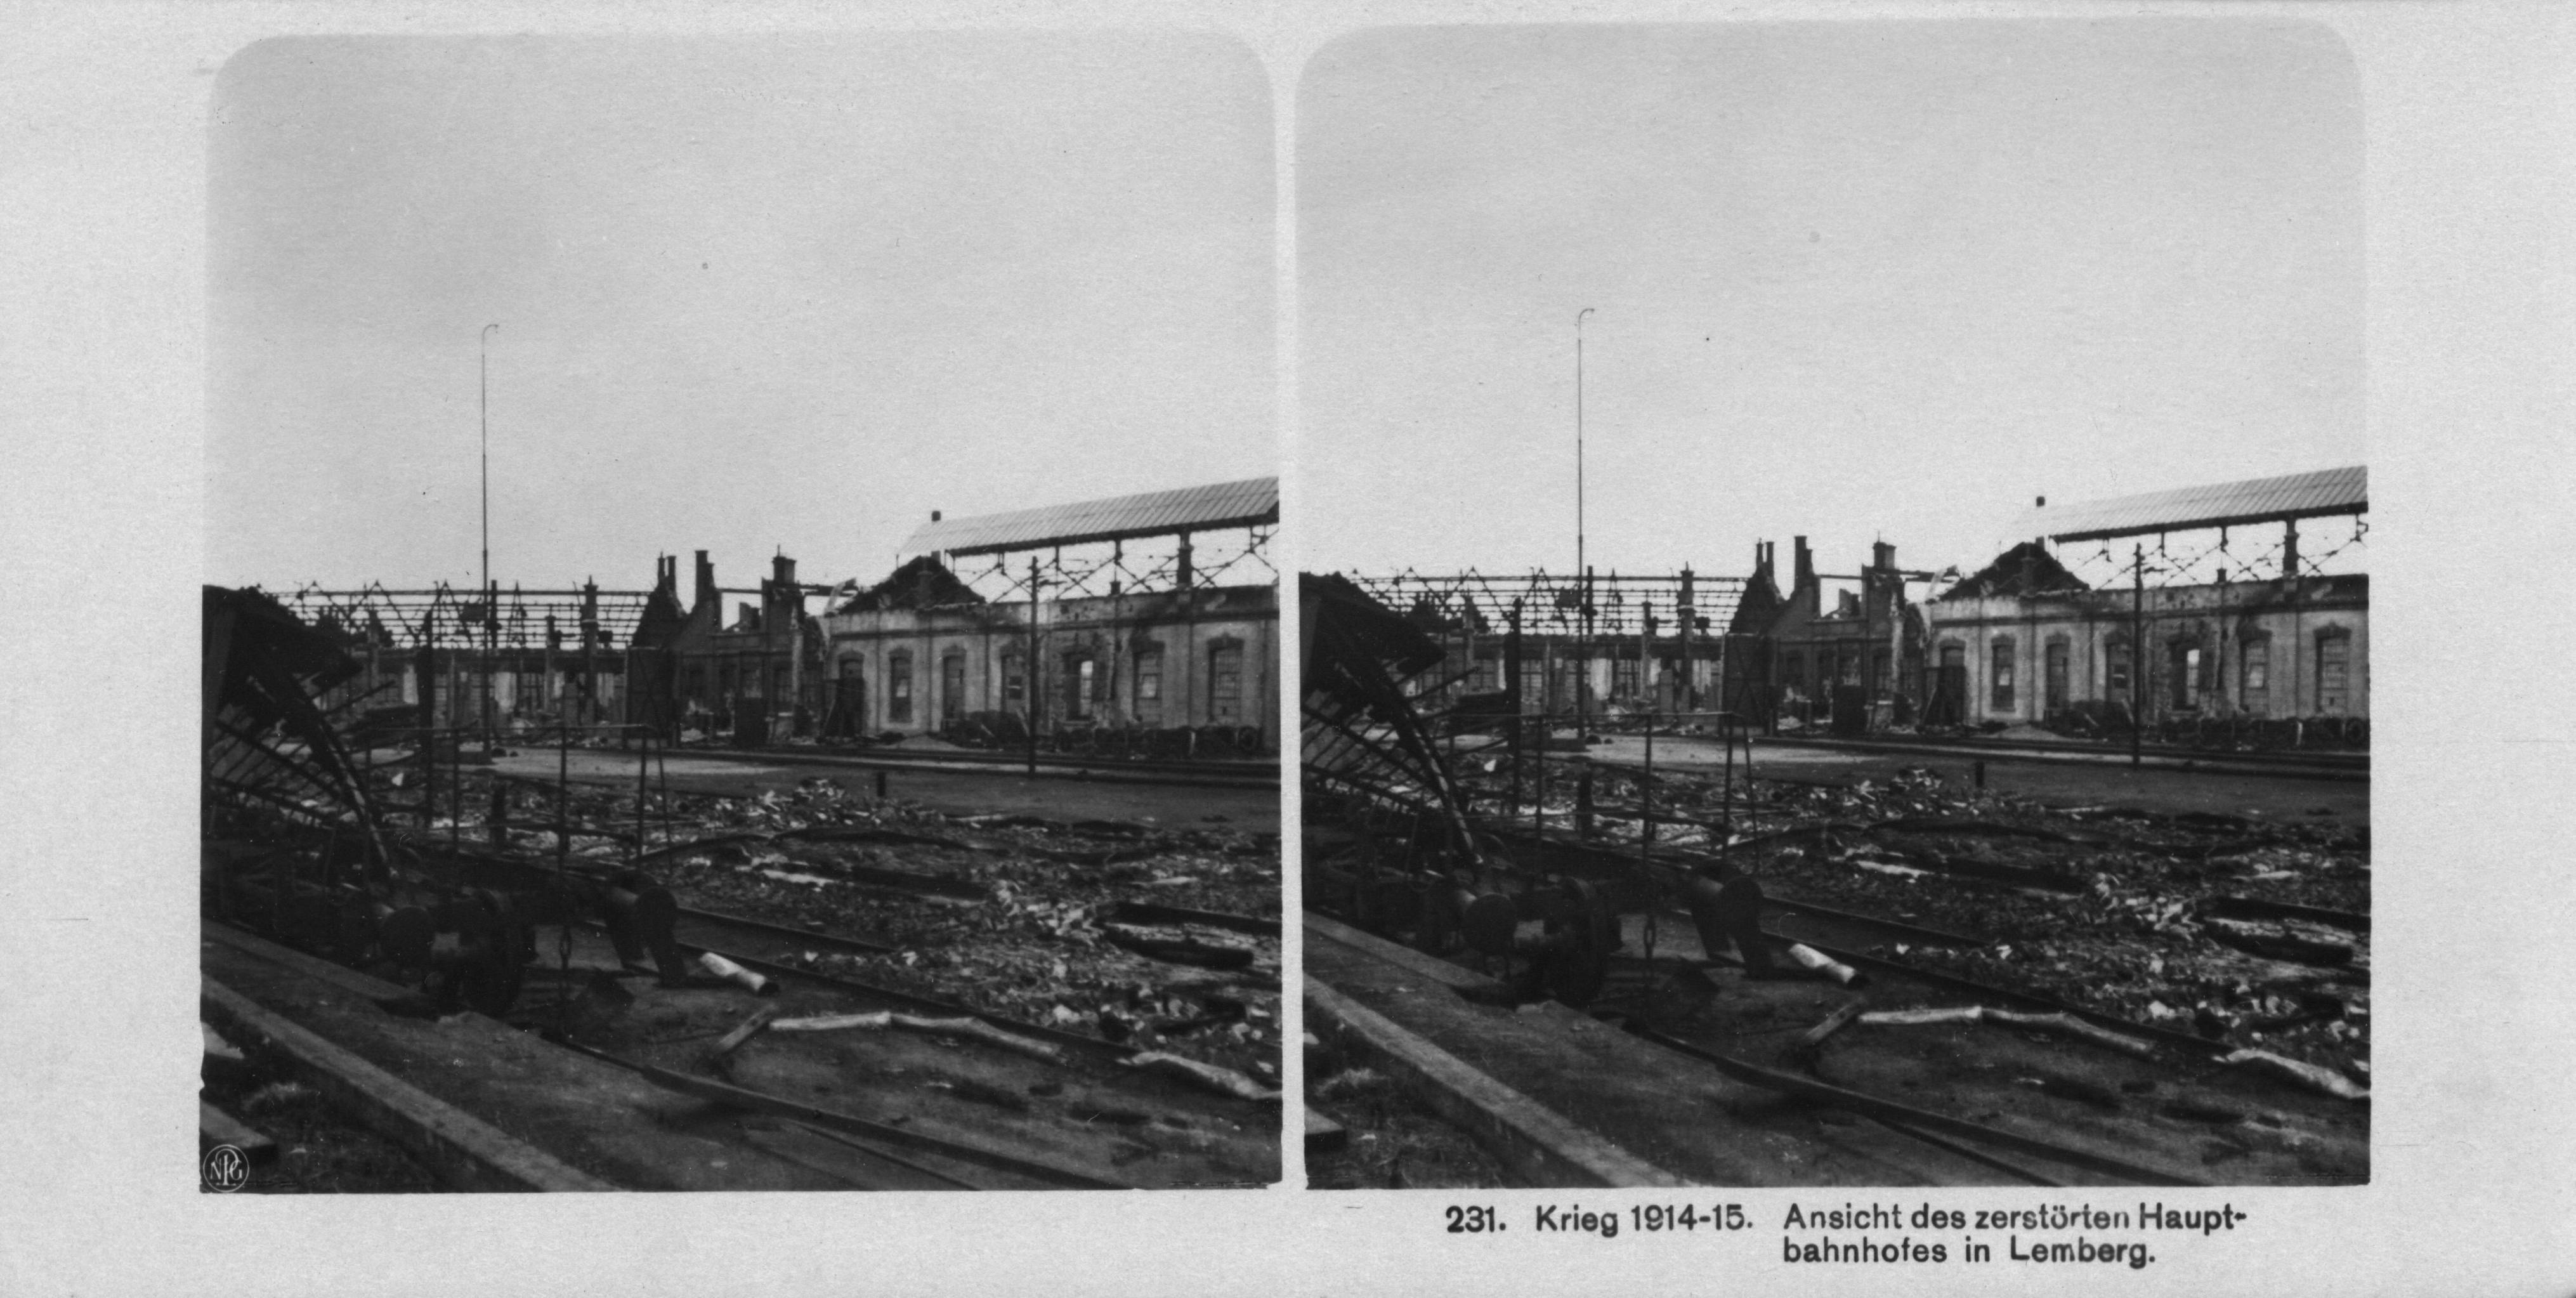 "Ansicht des zerstörten Hauptbahnhofes in Lemberg" - View of the destroyed Lviv main railway station. (Lemberg = Lviv)